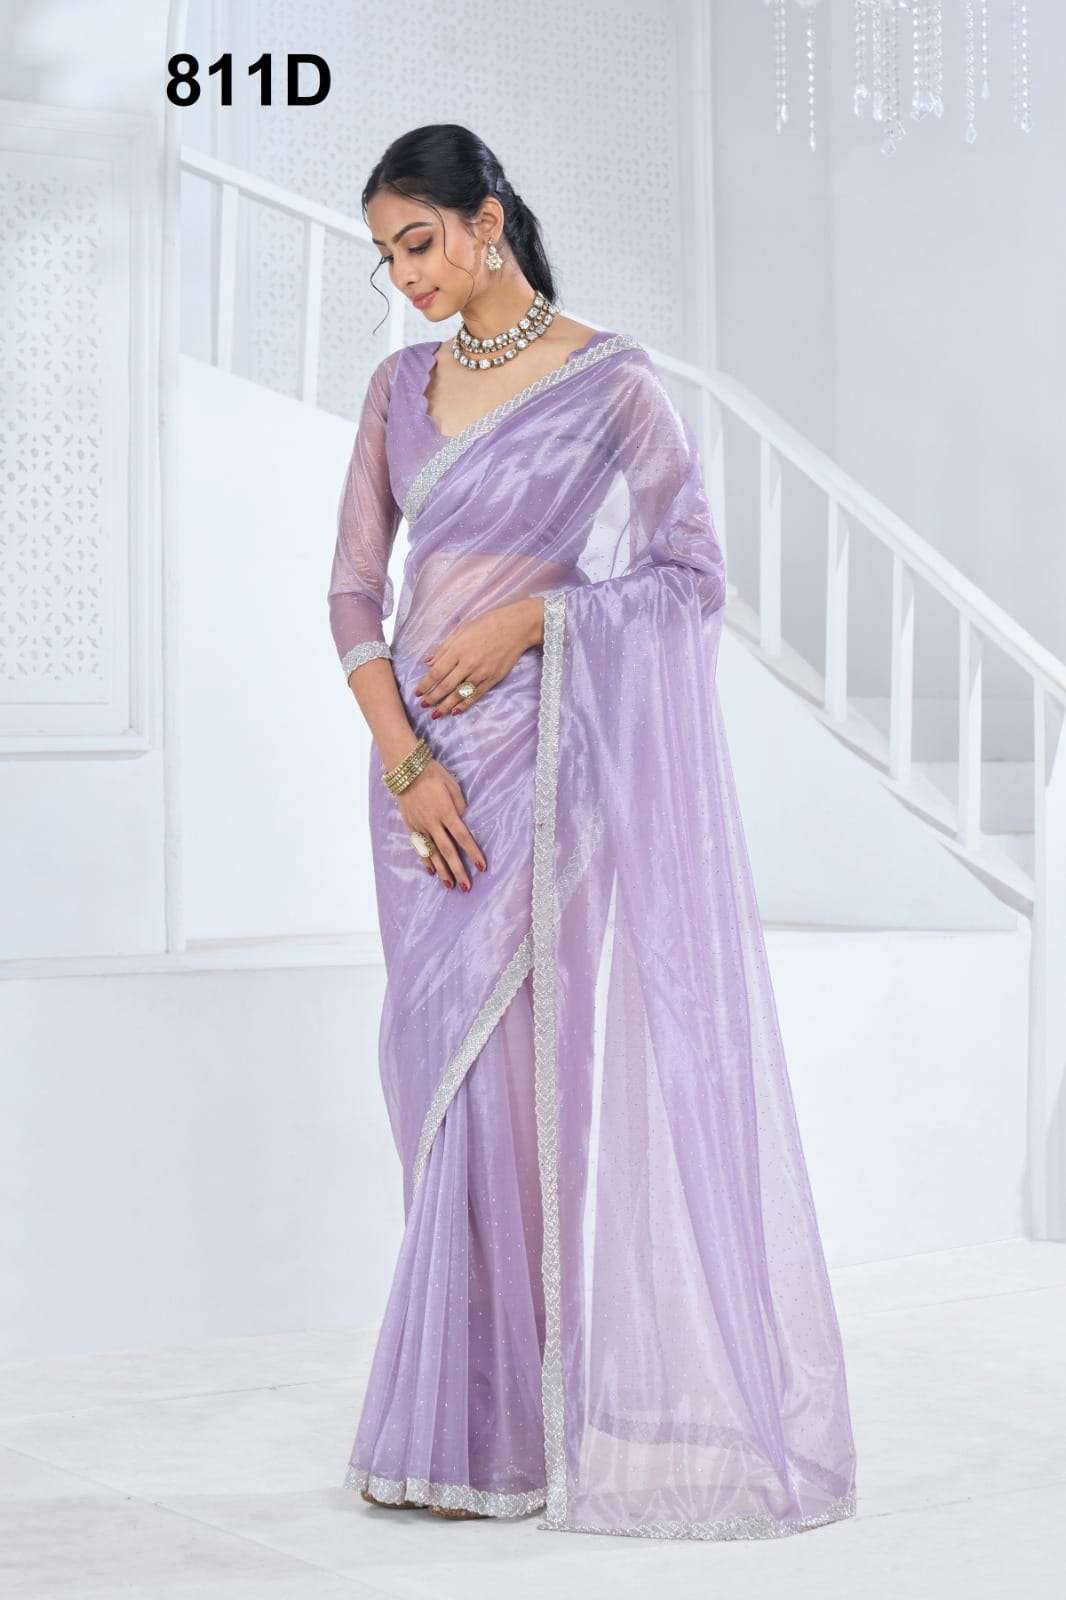 Mehek 811 Colors Fancy Latest Designer Style Saree Catalog Buy Online